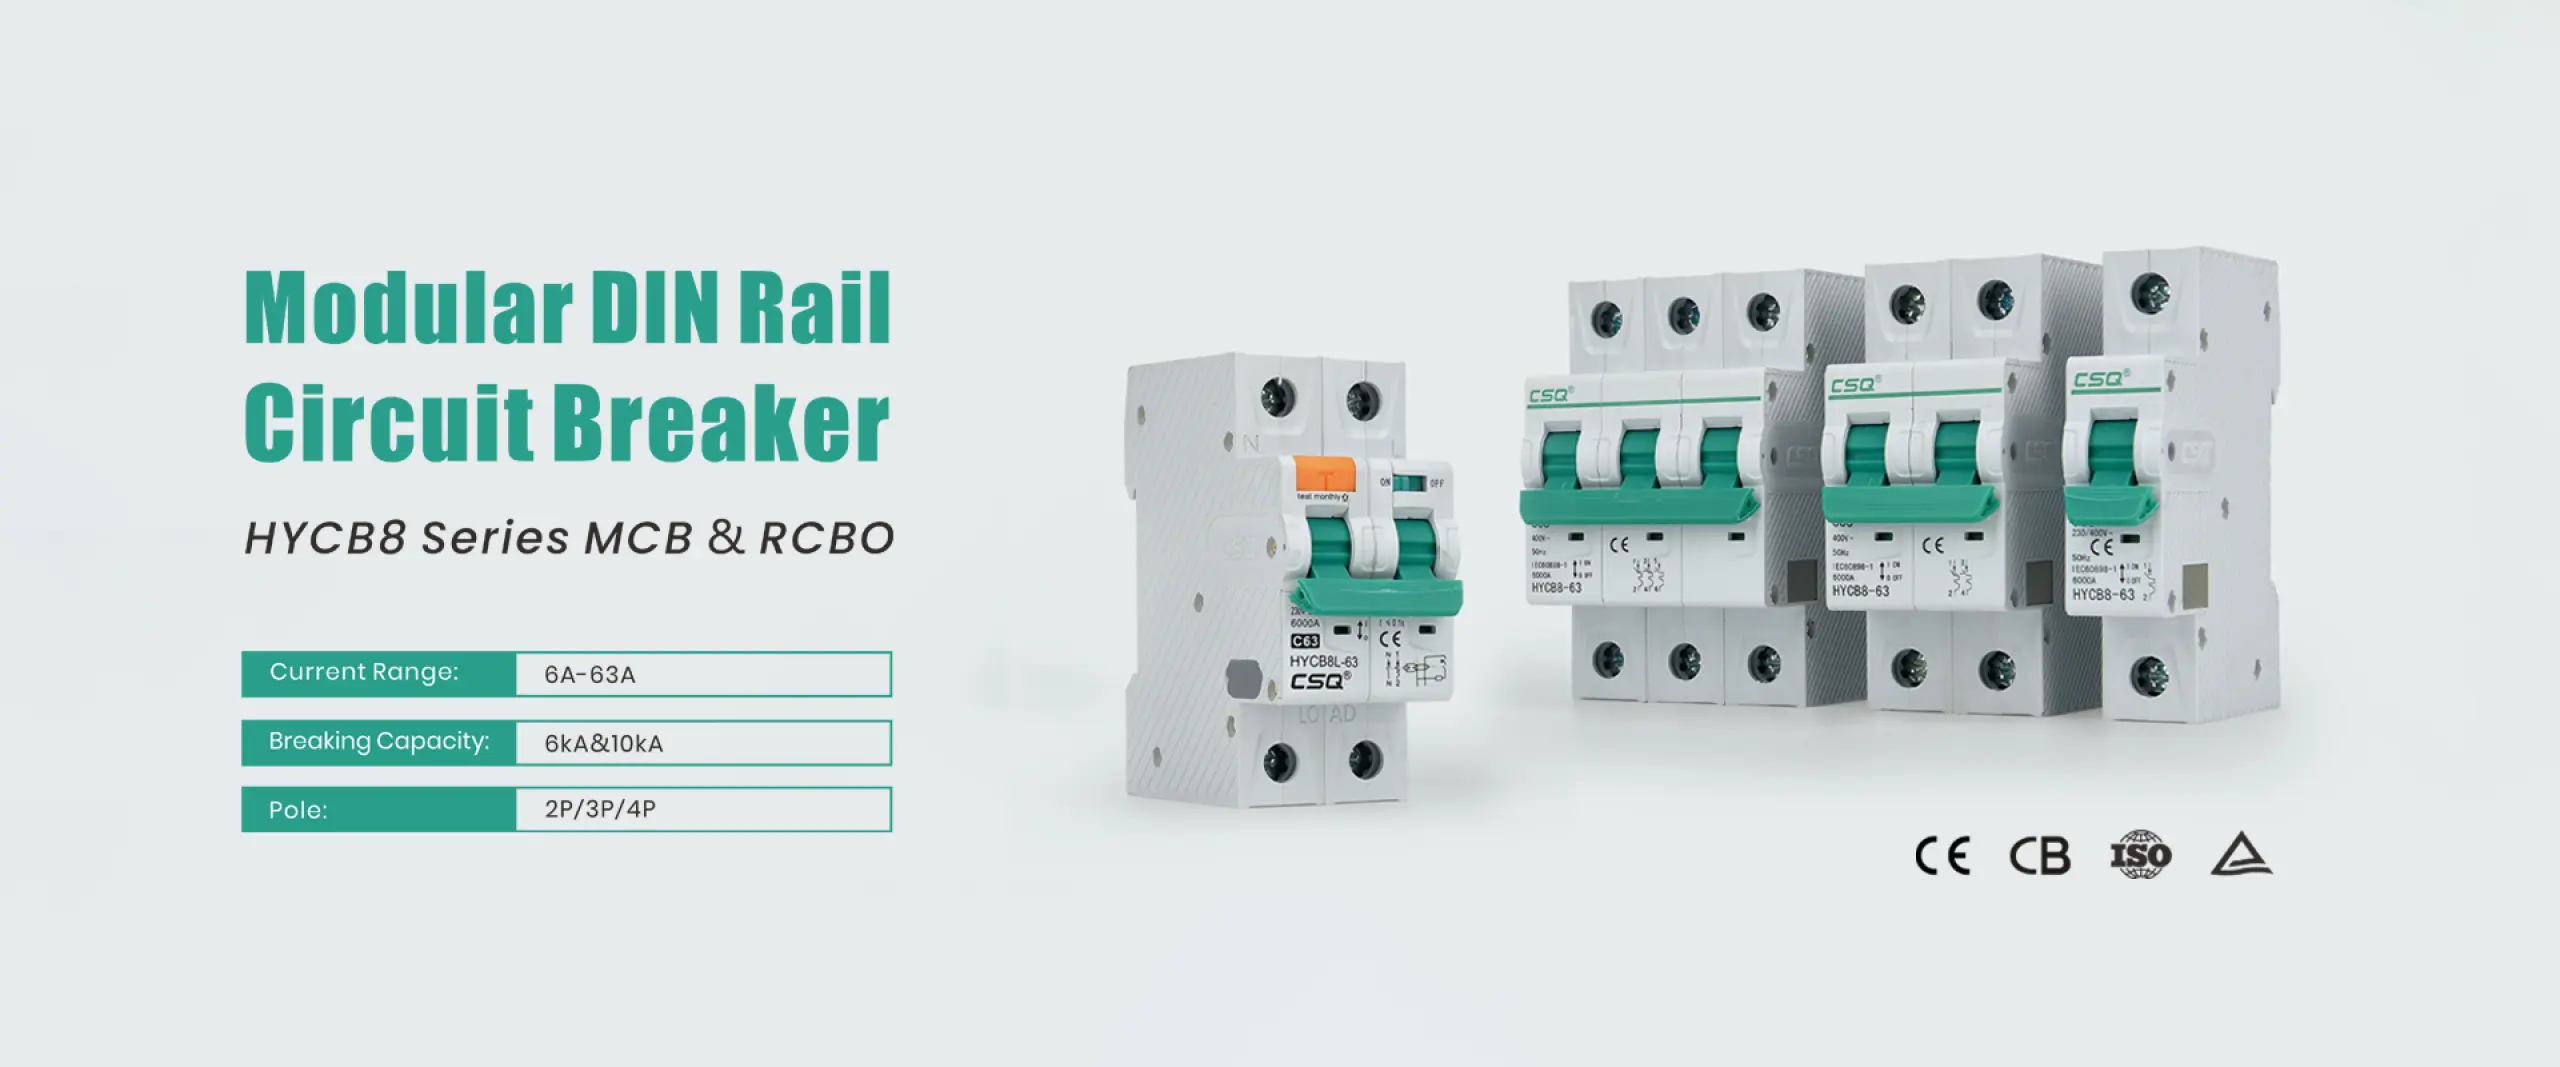 Modular DiN Rail Circuit Breaker